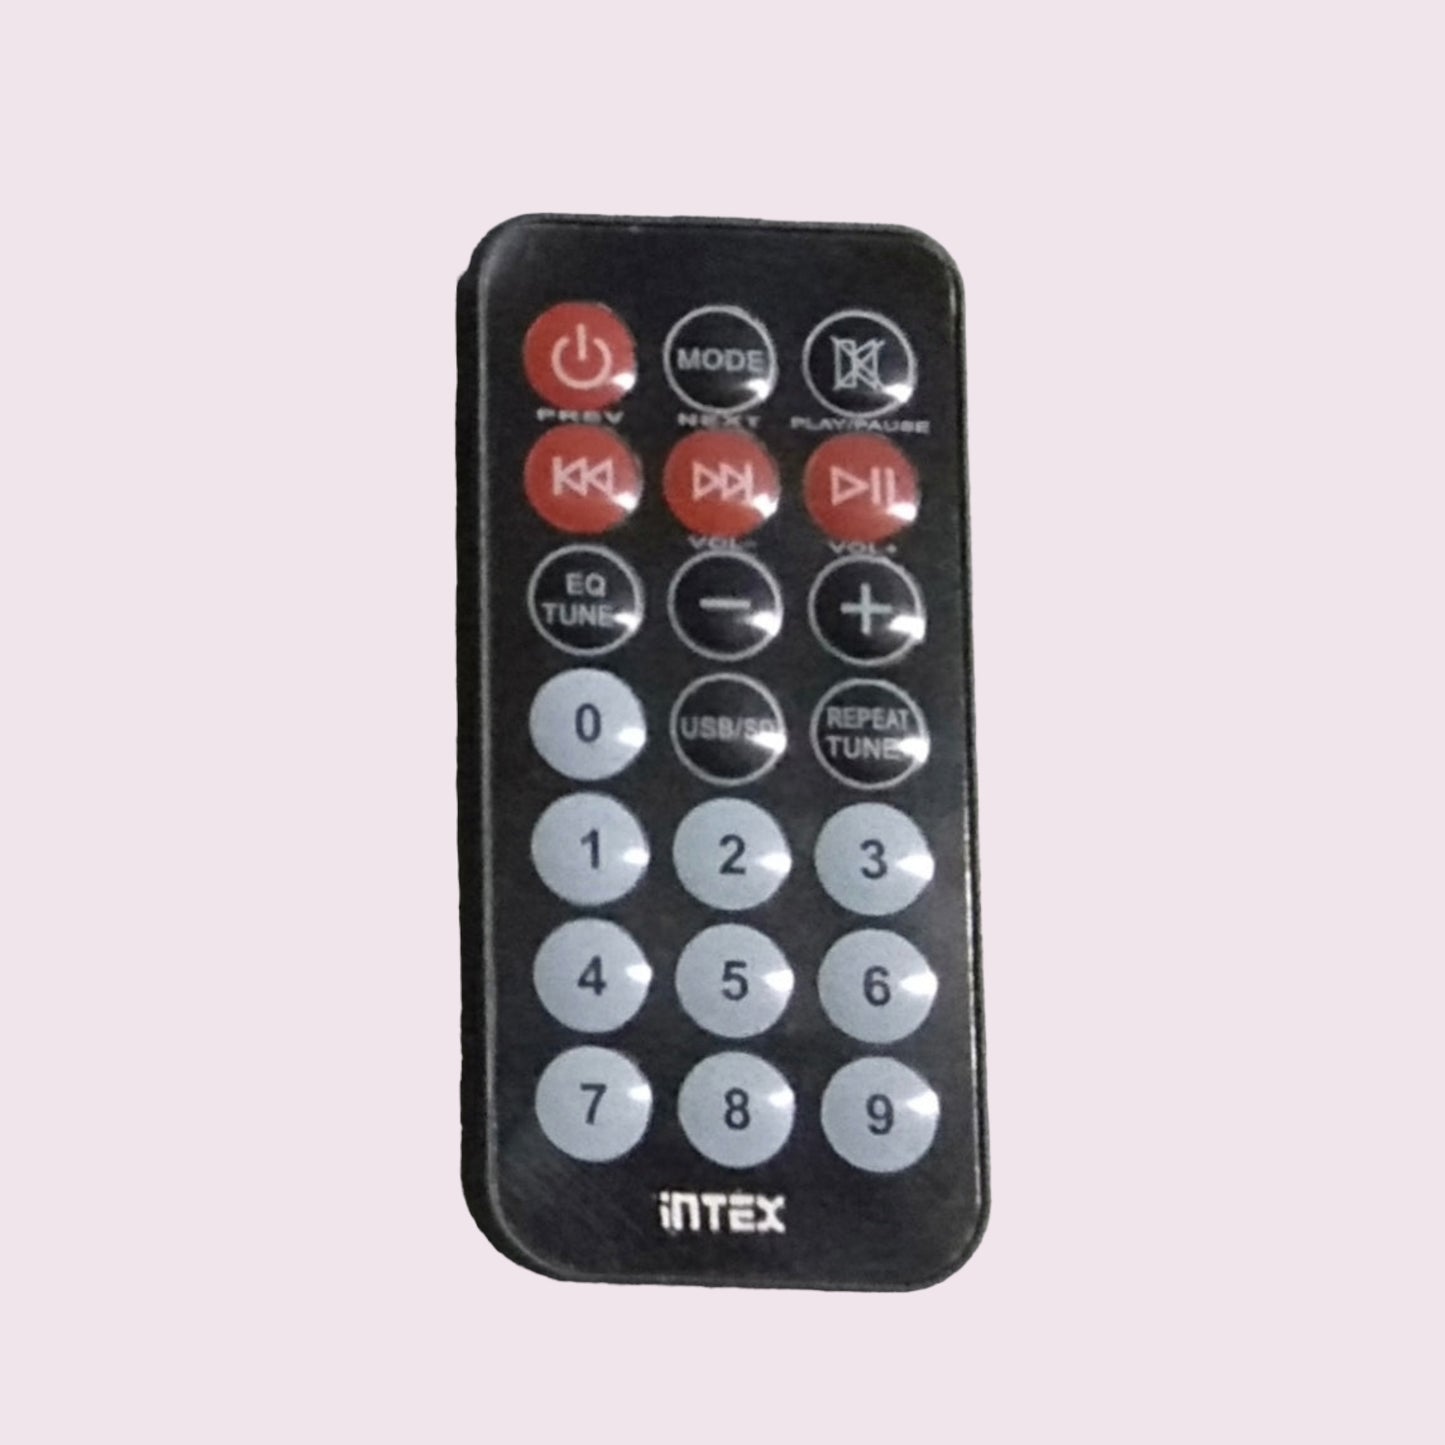 Intex  home theater remote controller (HM27)